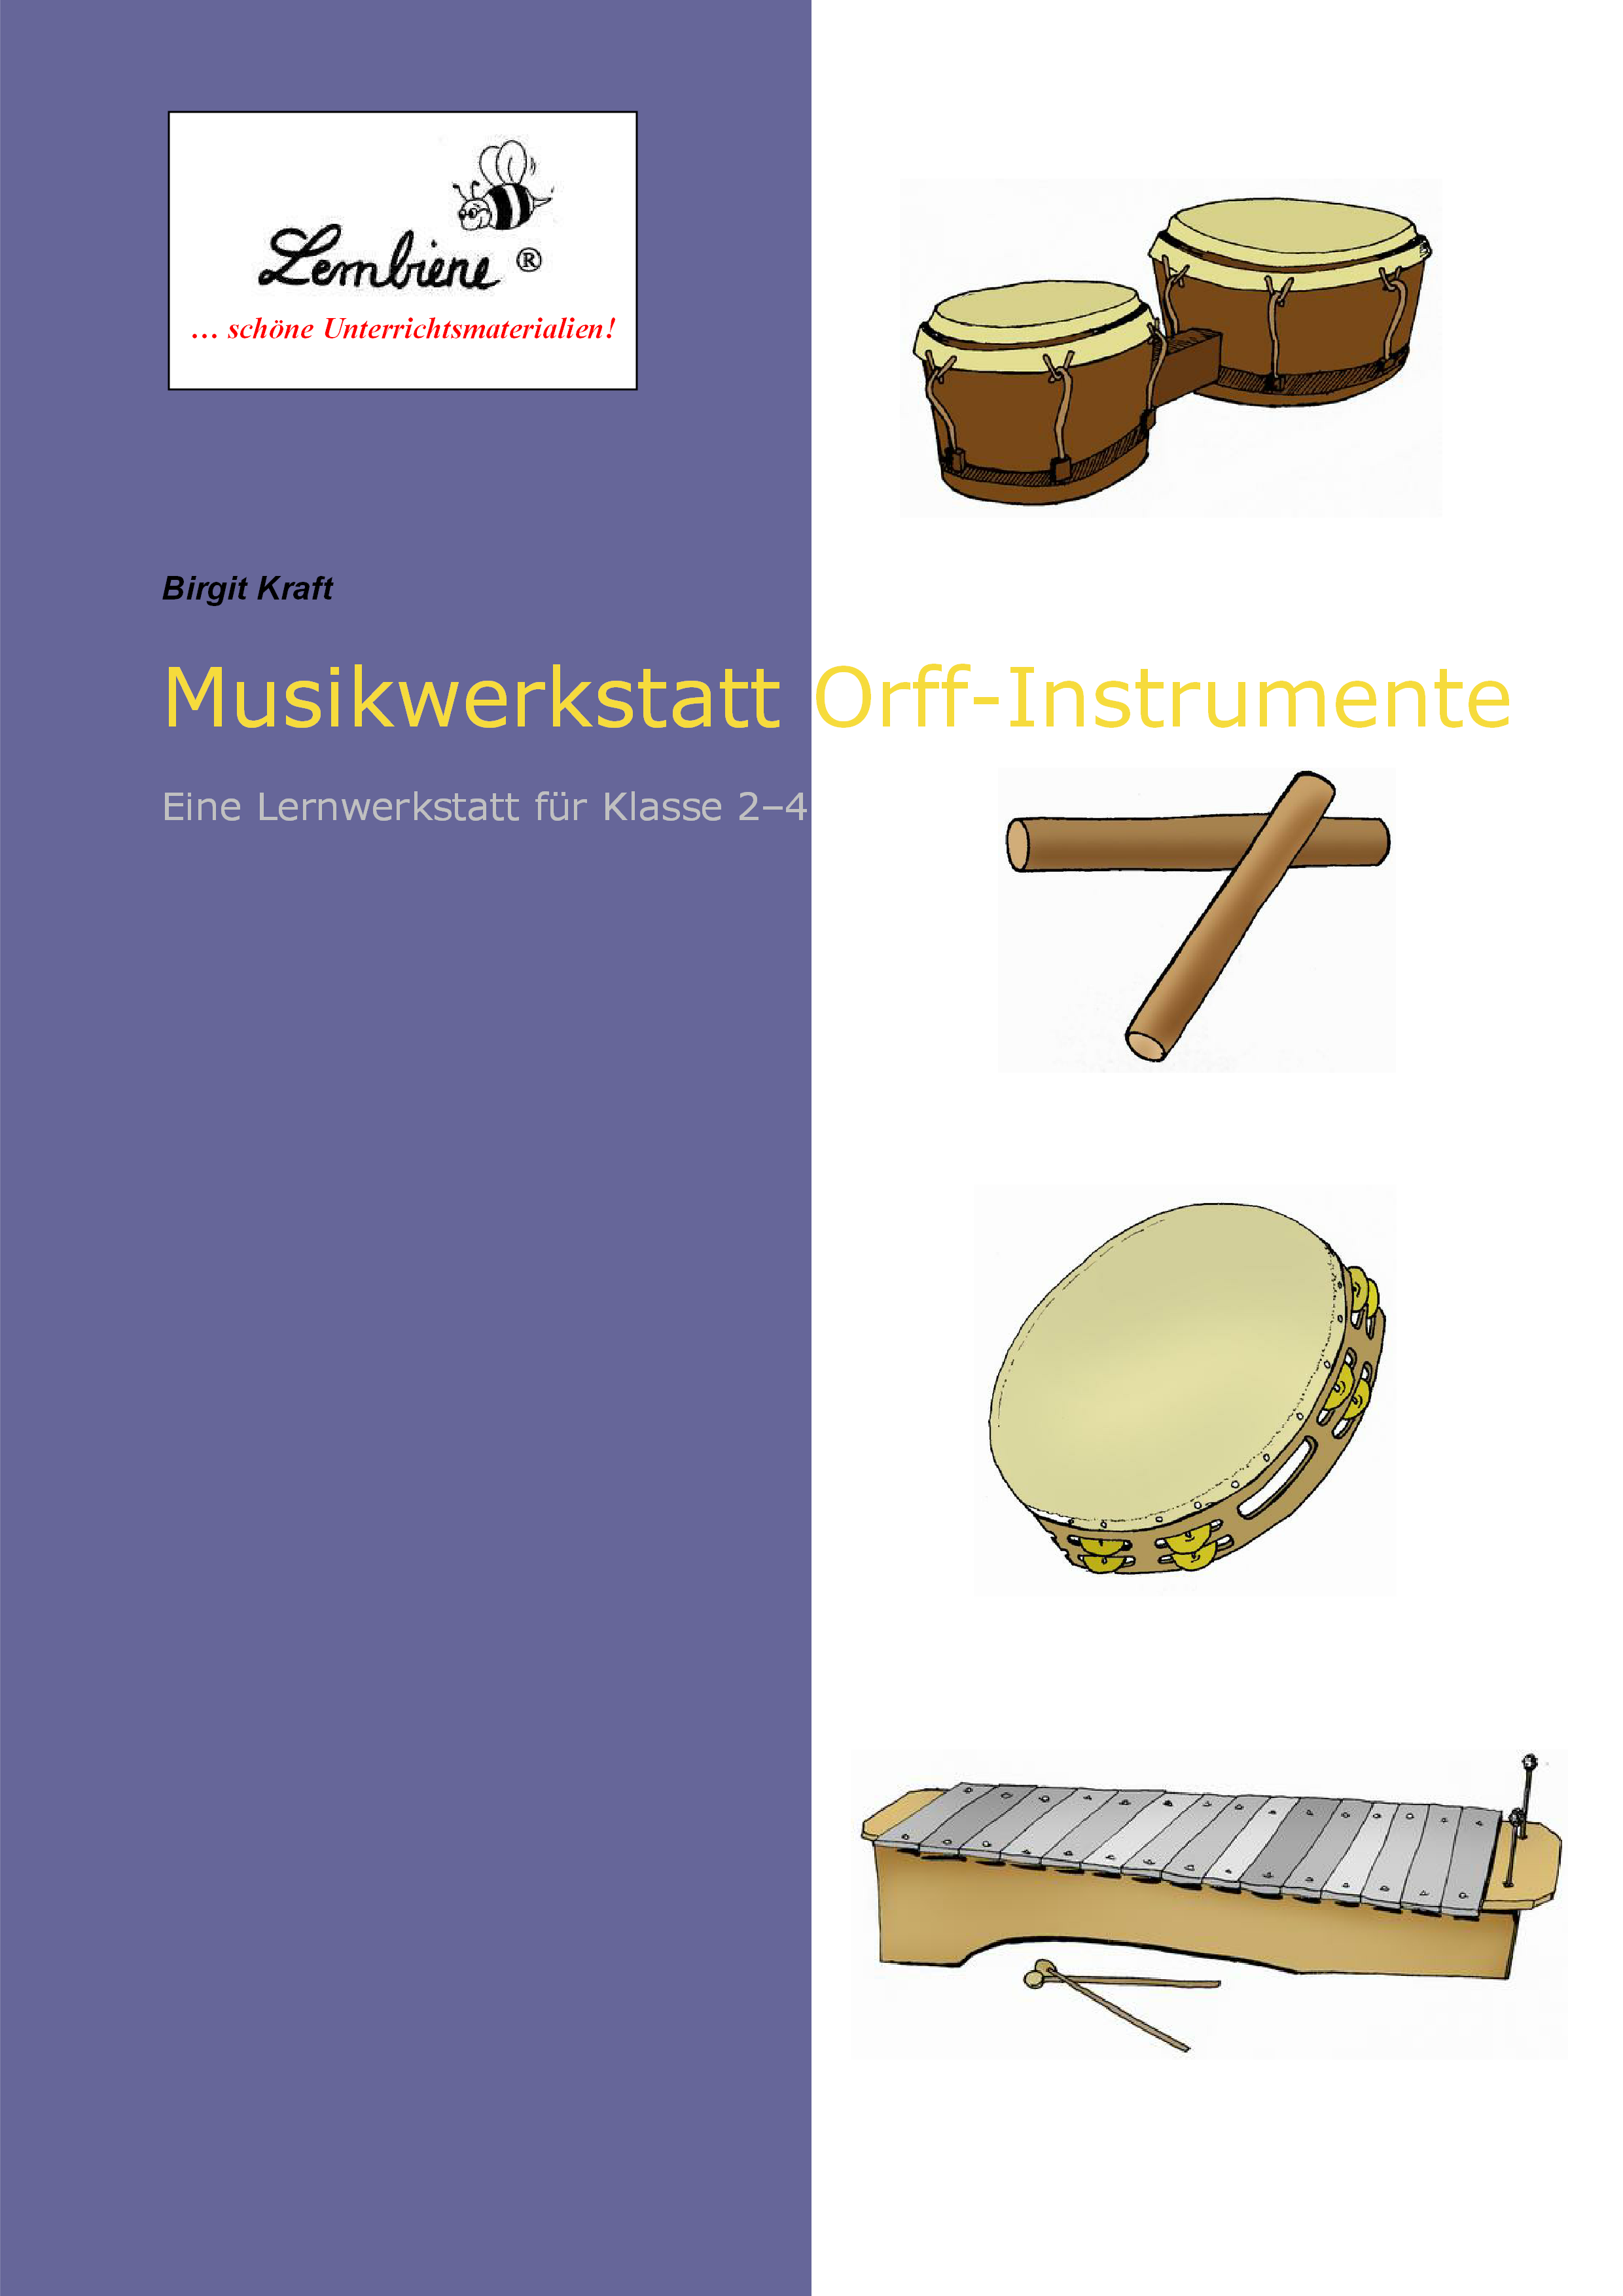 orff-instrumente kennenlernen grundschule